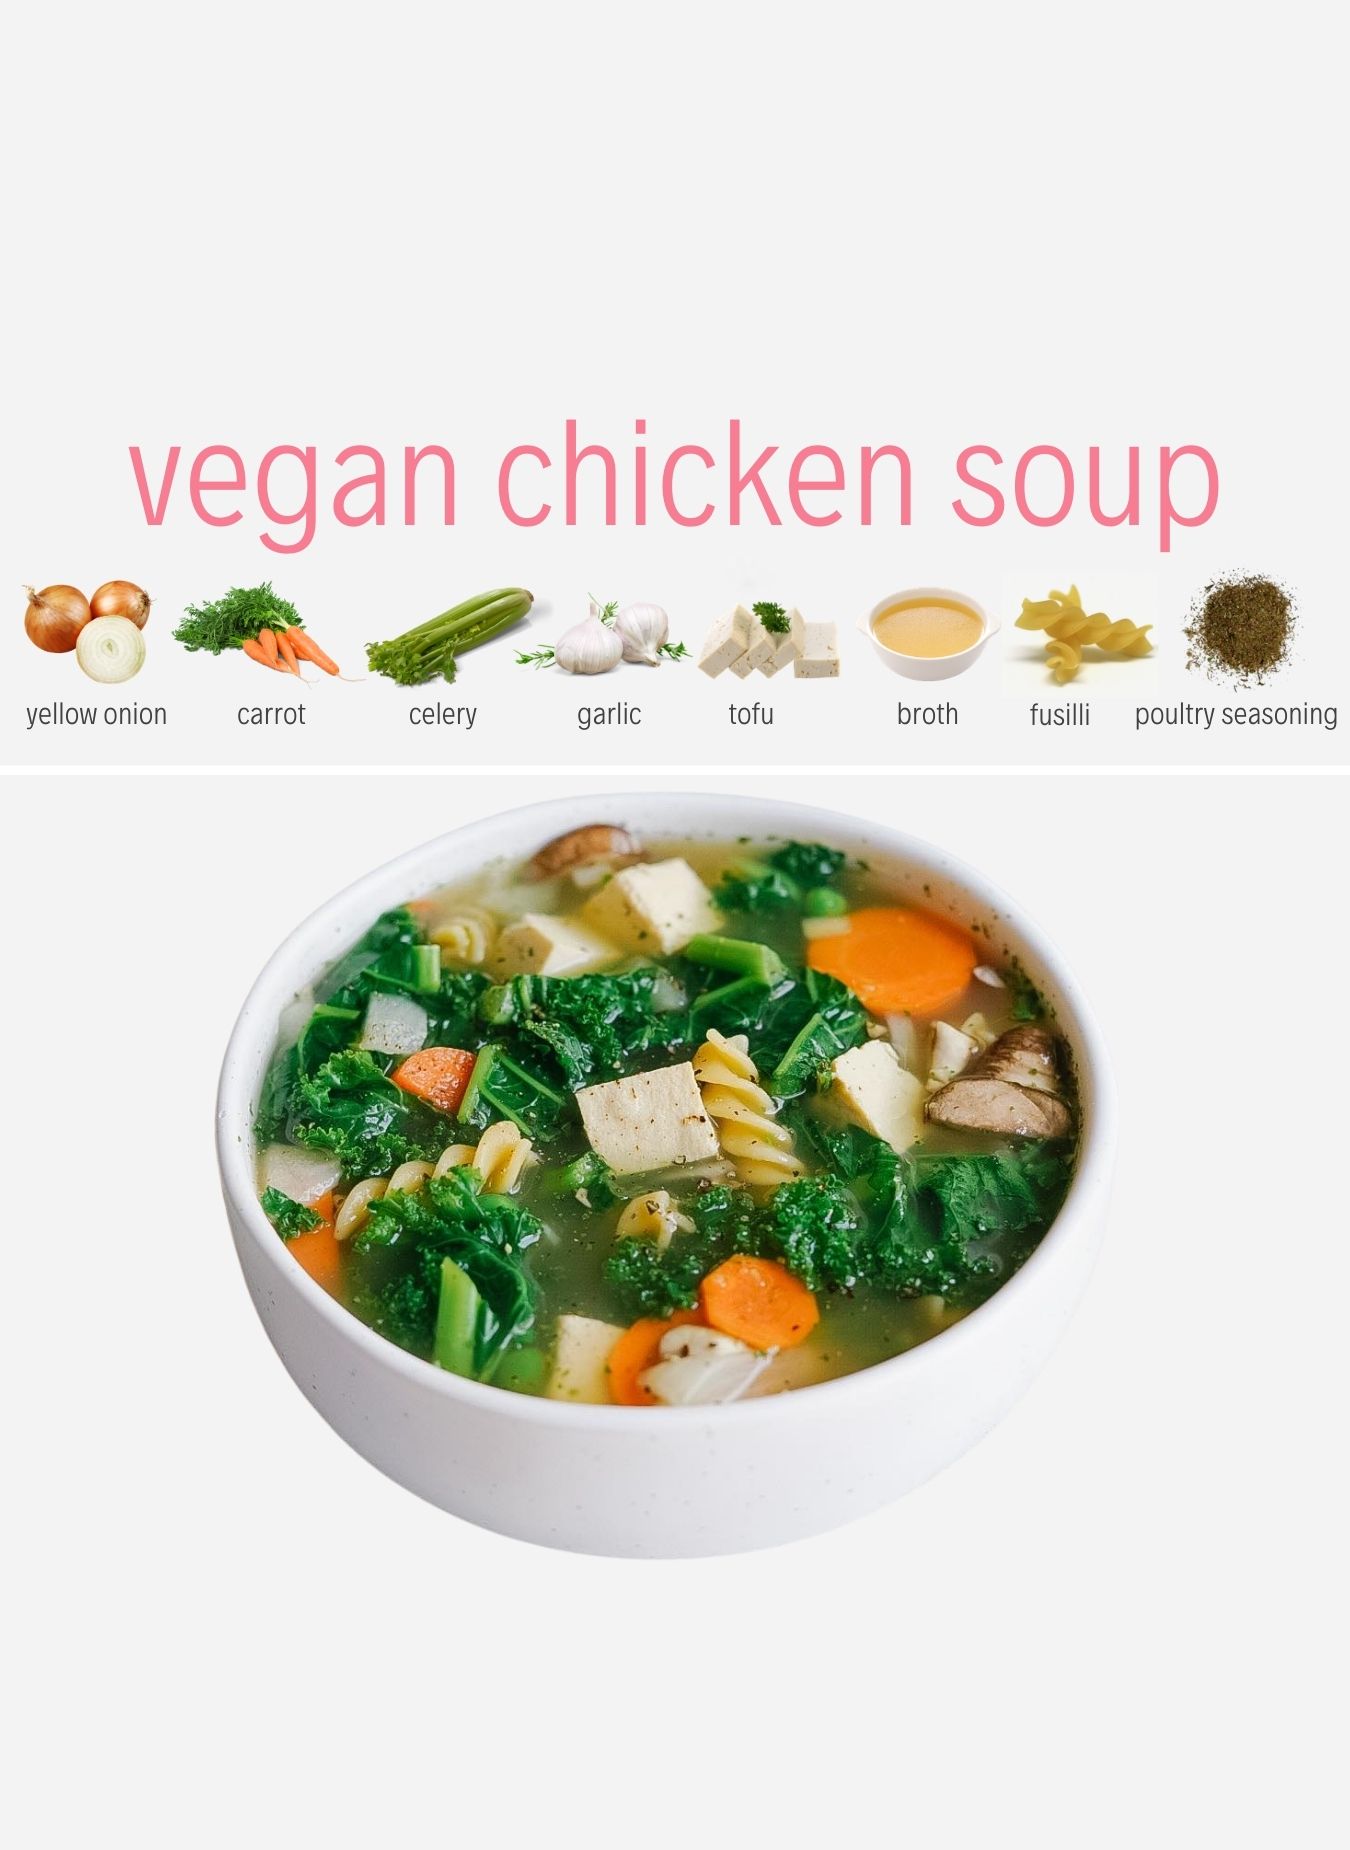 https://plantyou.com/wp-content/uploads/2020/09/vegan-chicken-soup.jpg